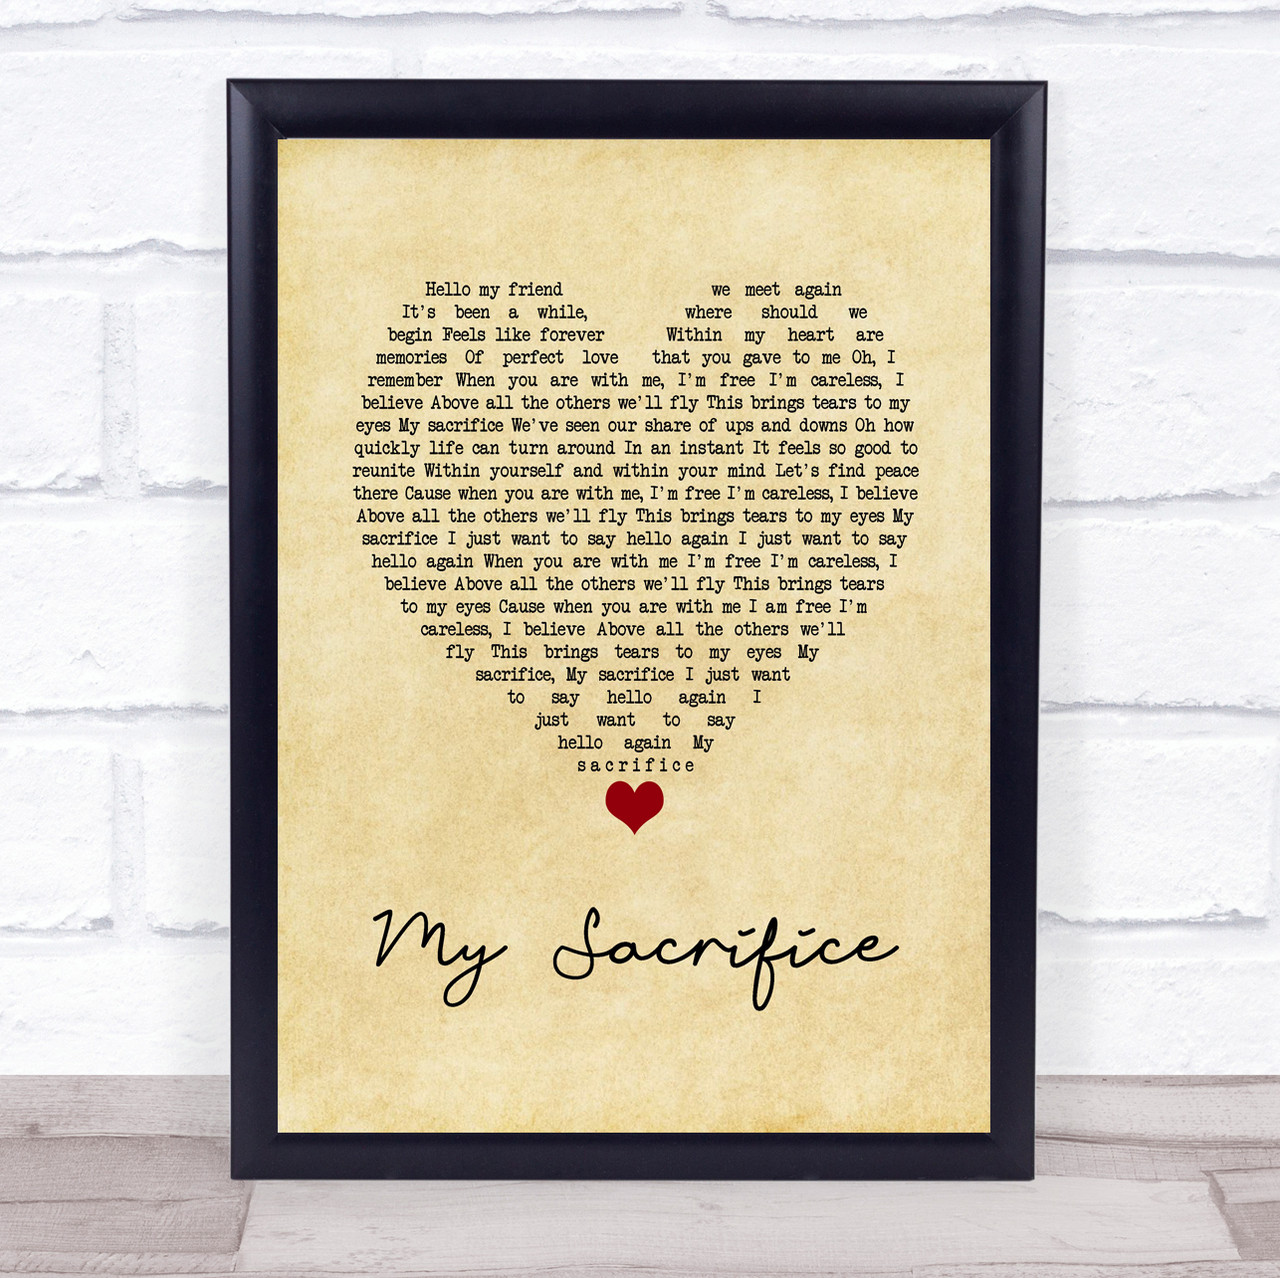 Creed  My Sacrifice   Creed lyrics, Great song lyrics